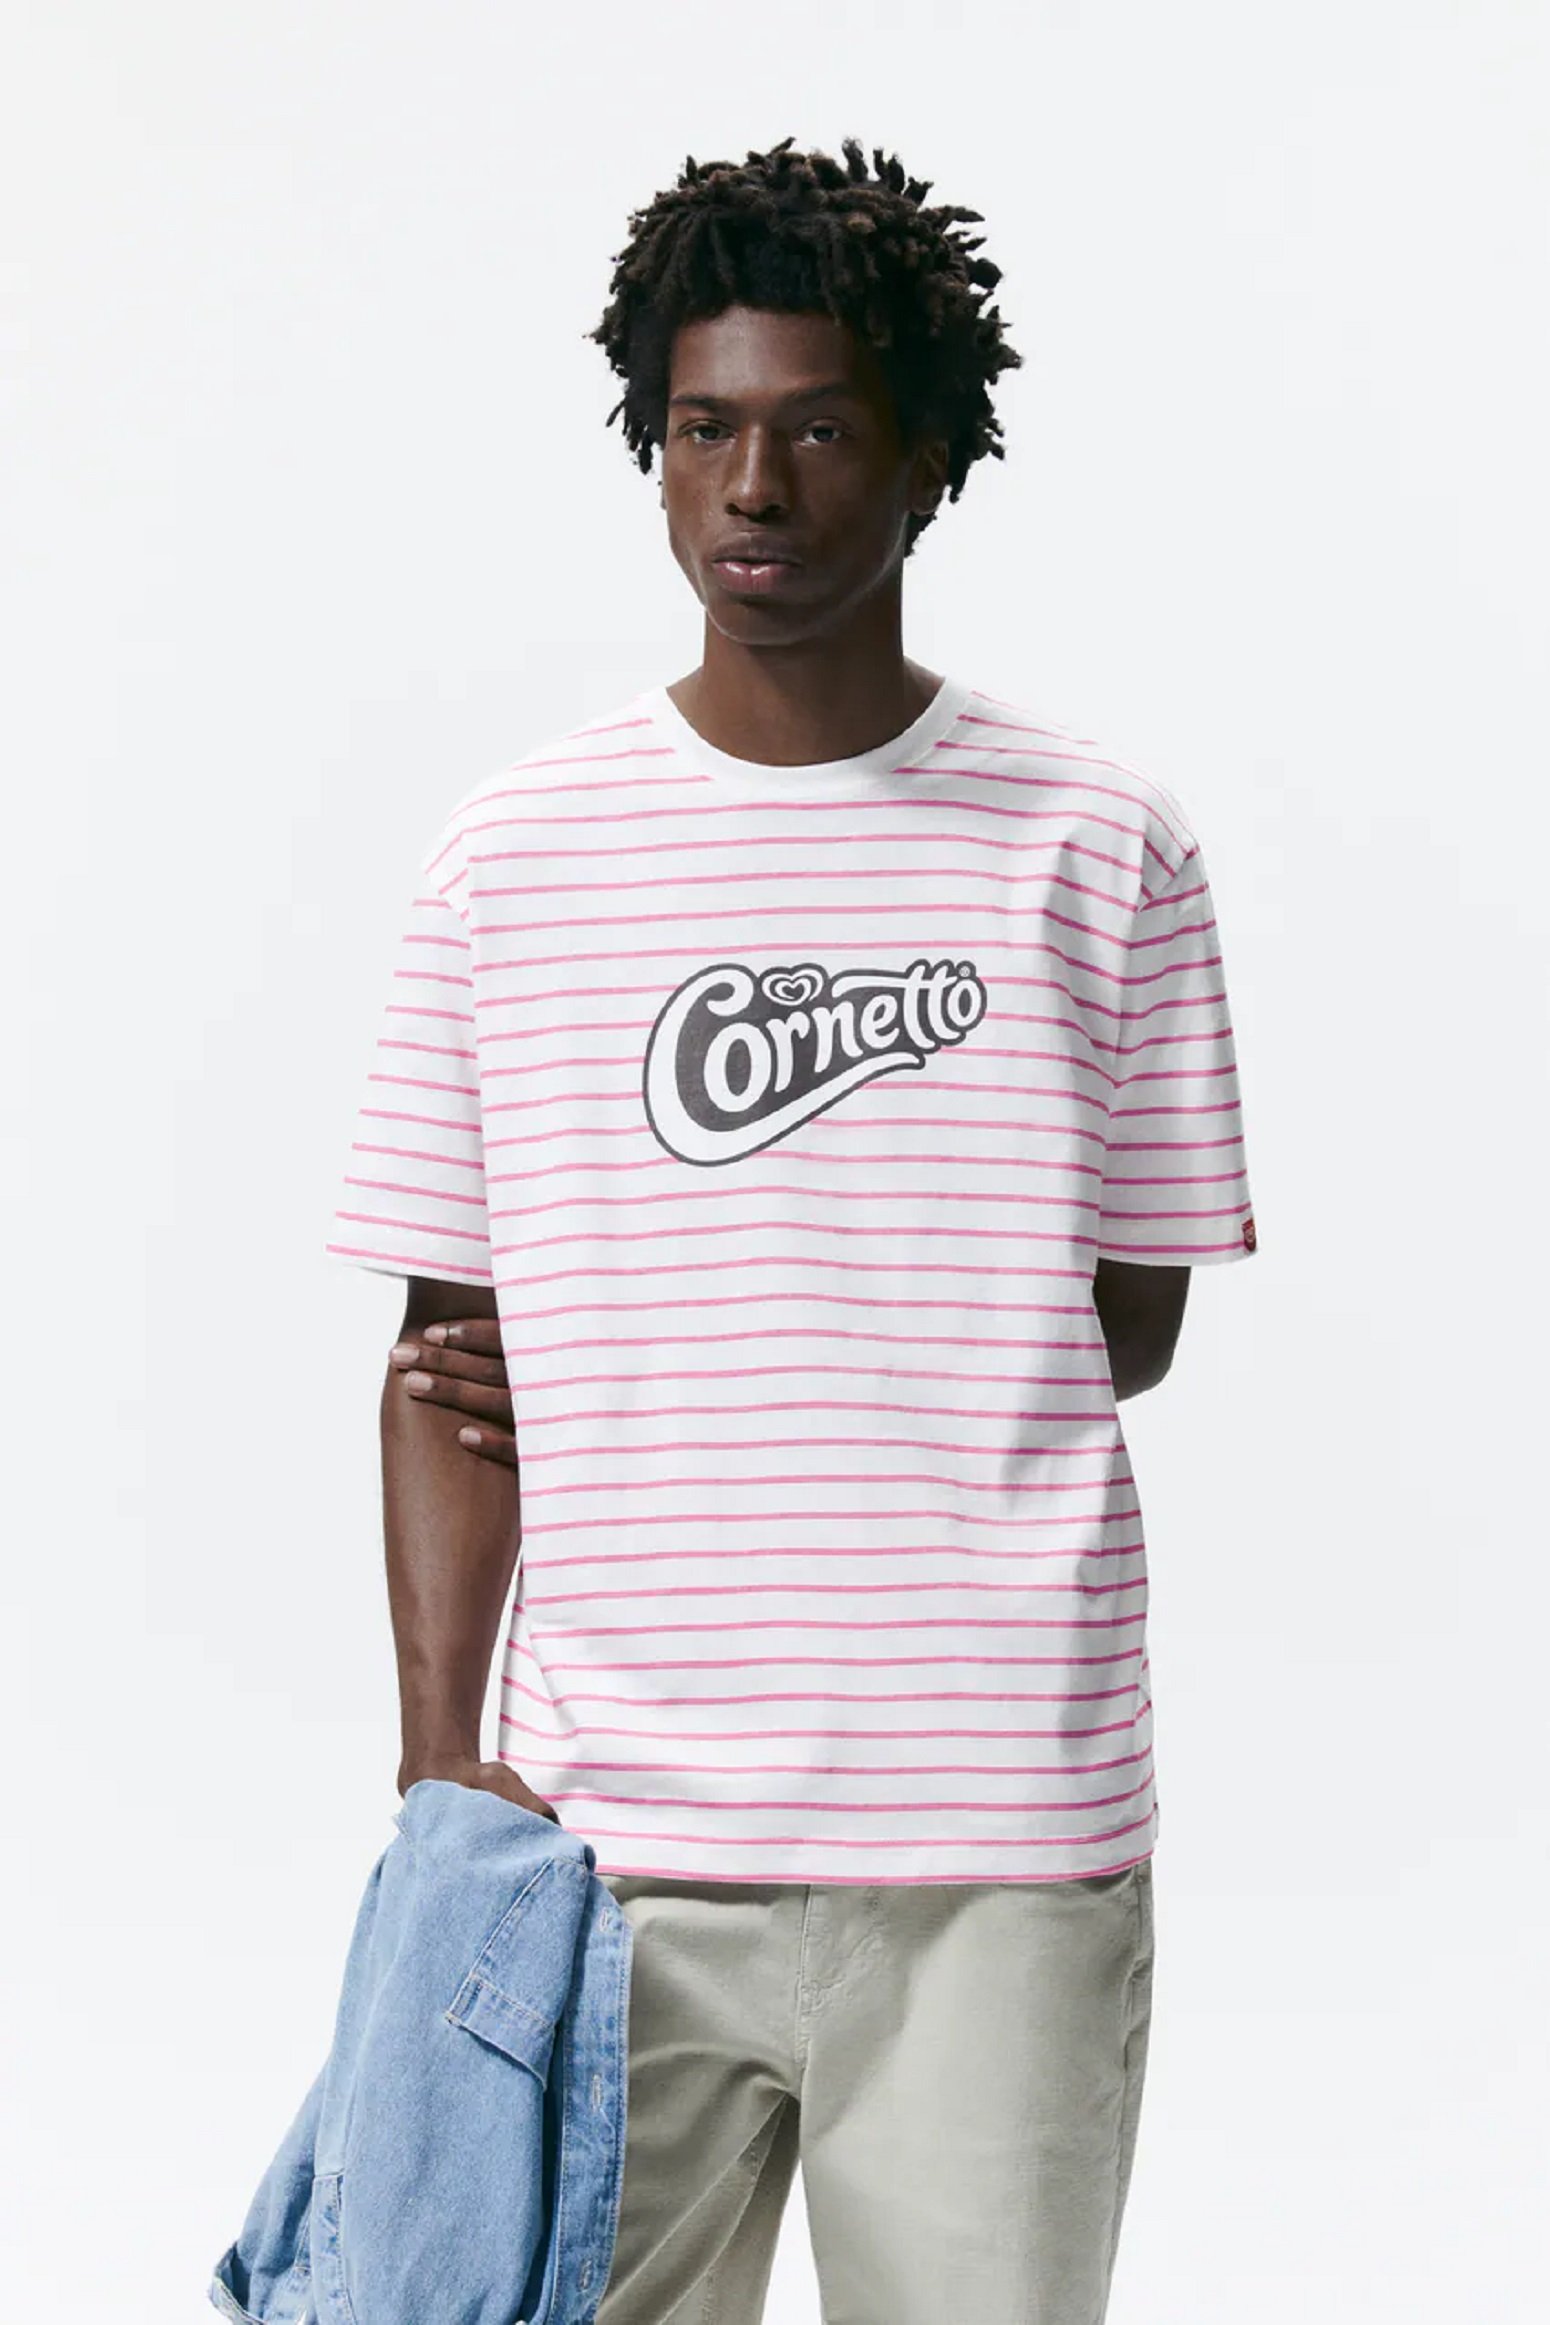 Camiseta Cornetto / Zara